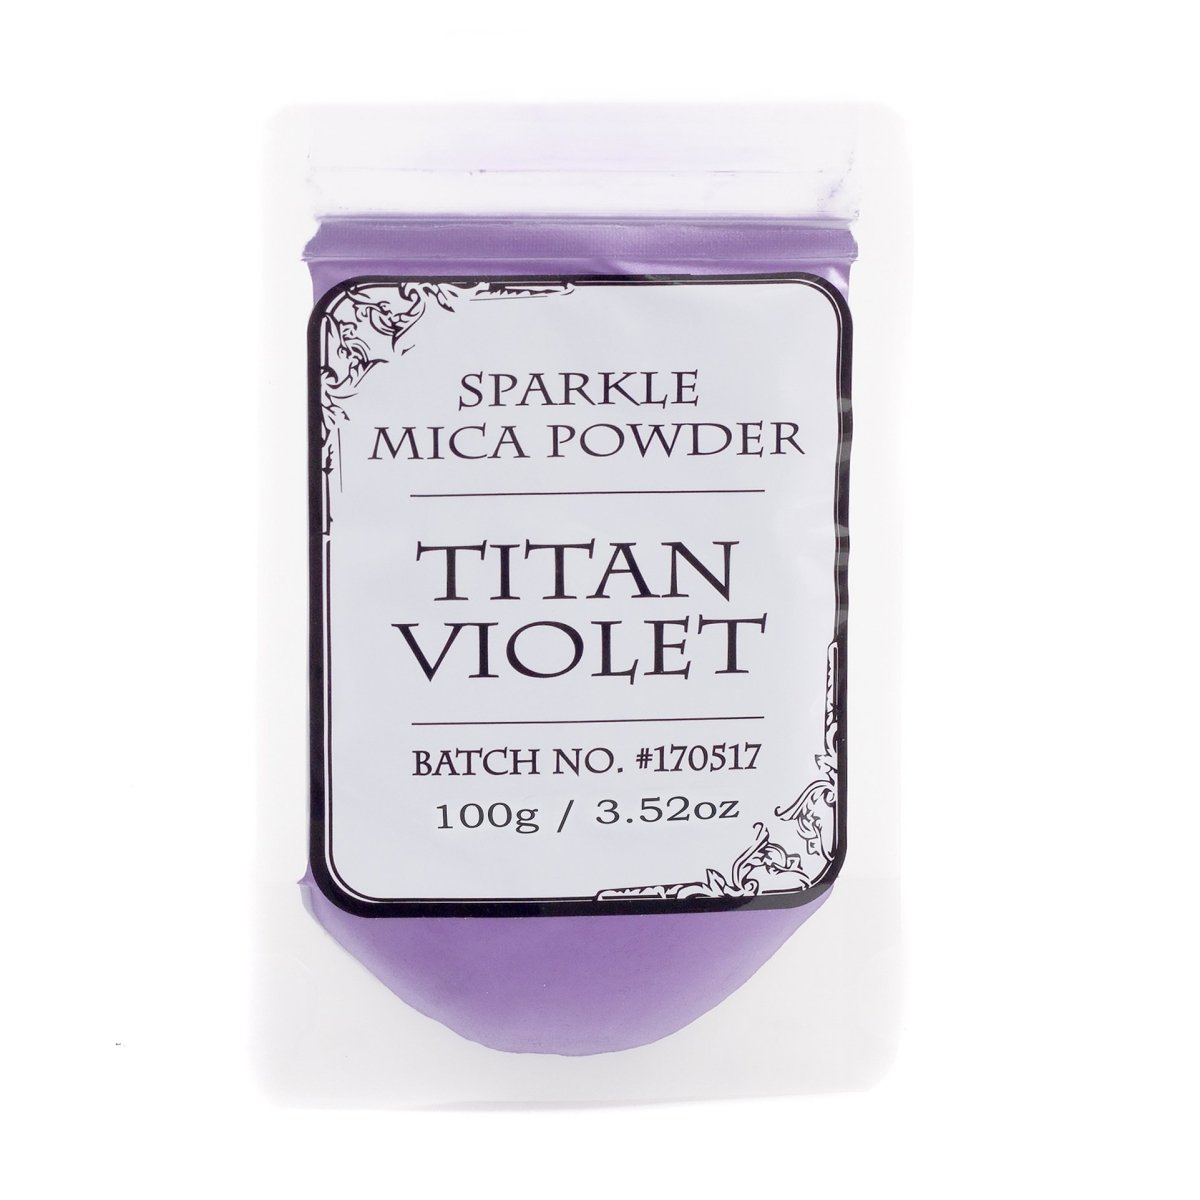 Titan Violet Sparkle Mica - Mystic Moments UK